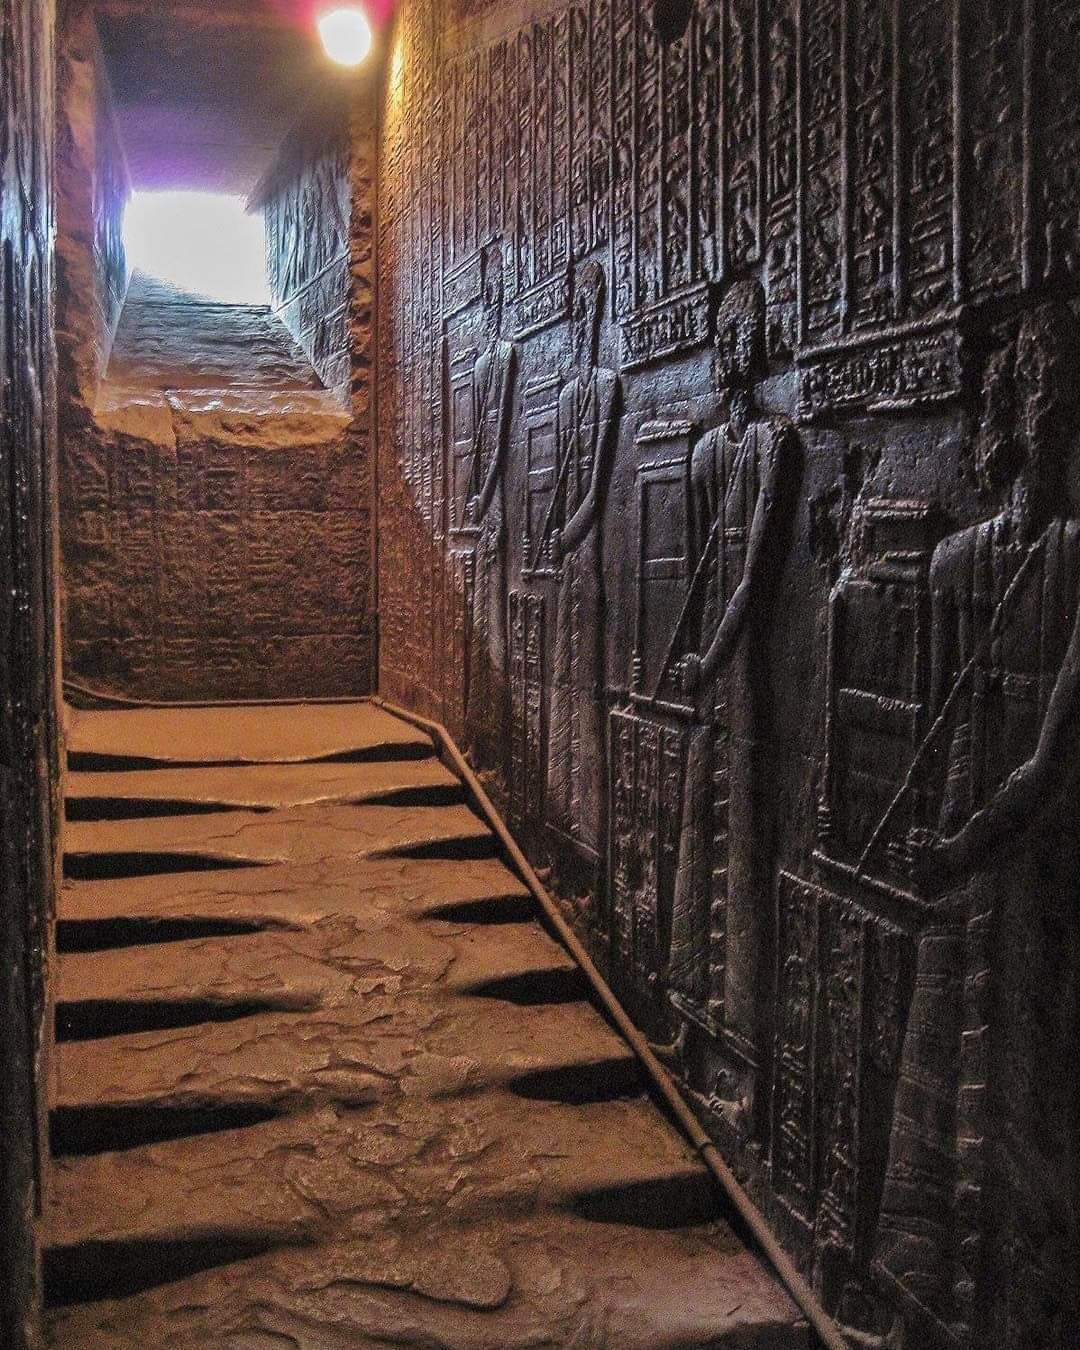 Temple of Hathor in Dendera